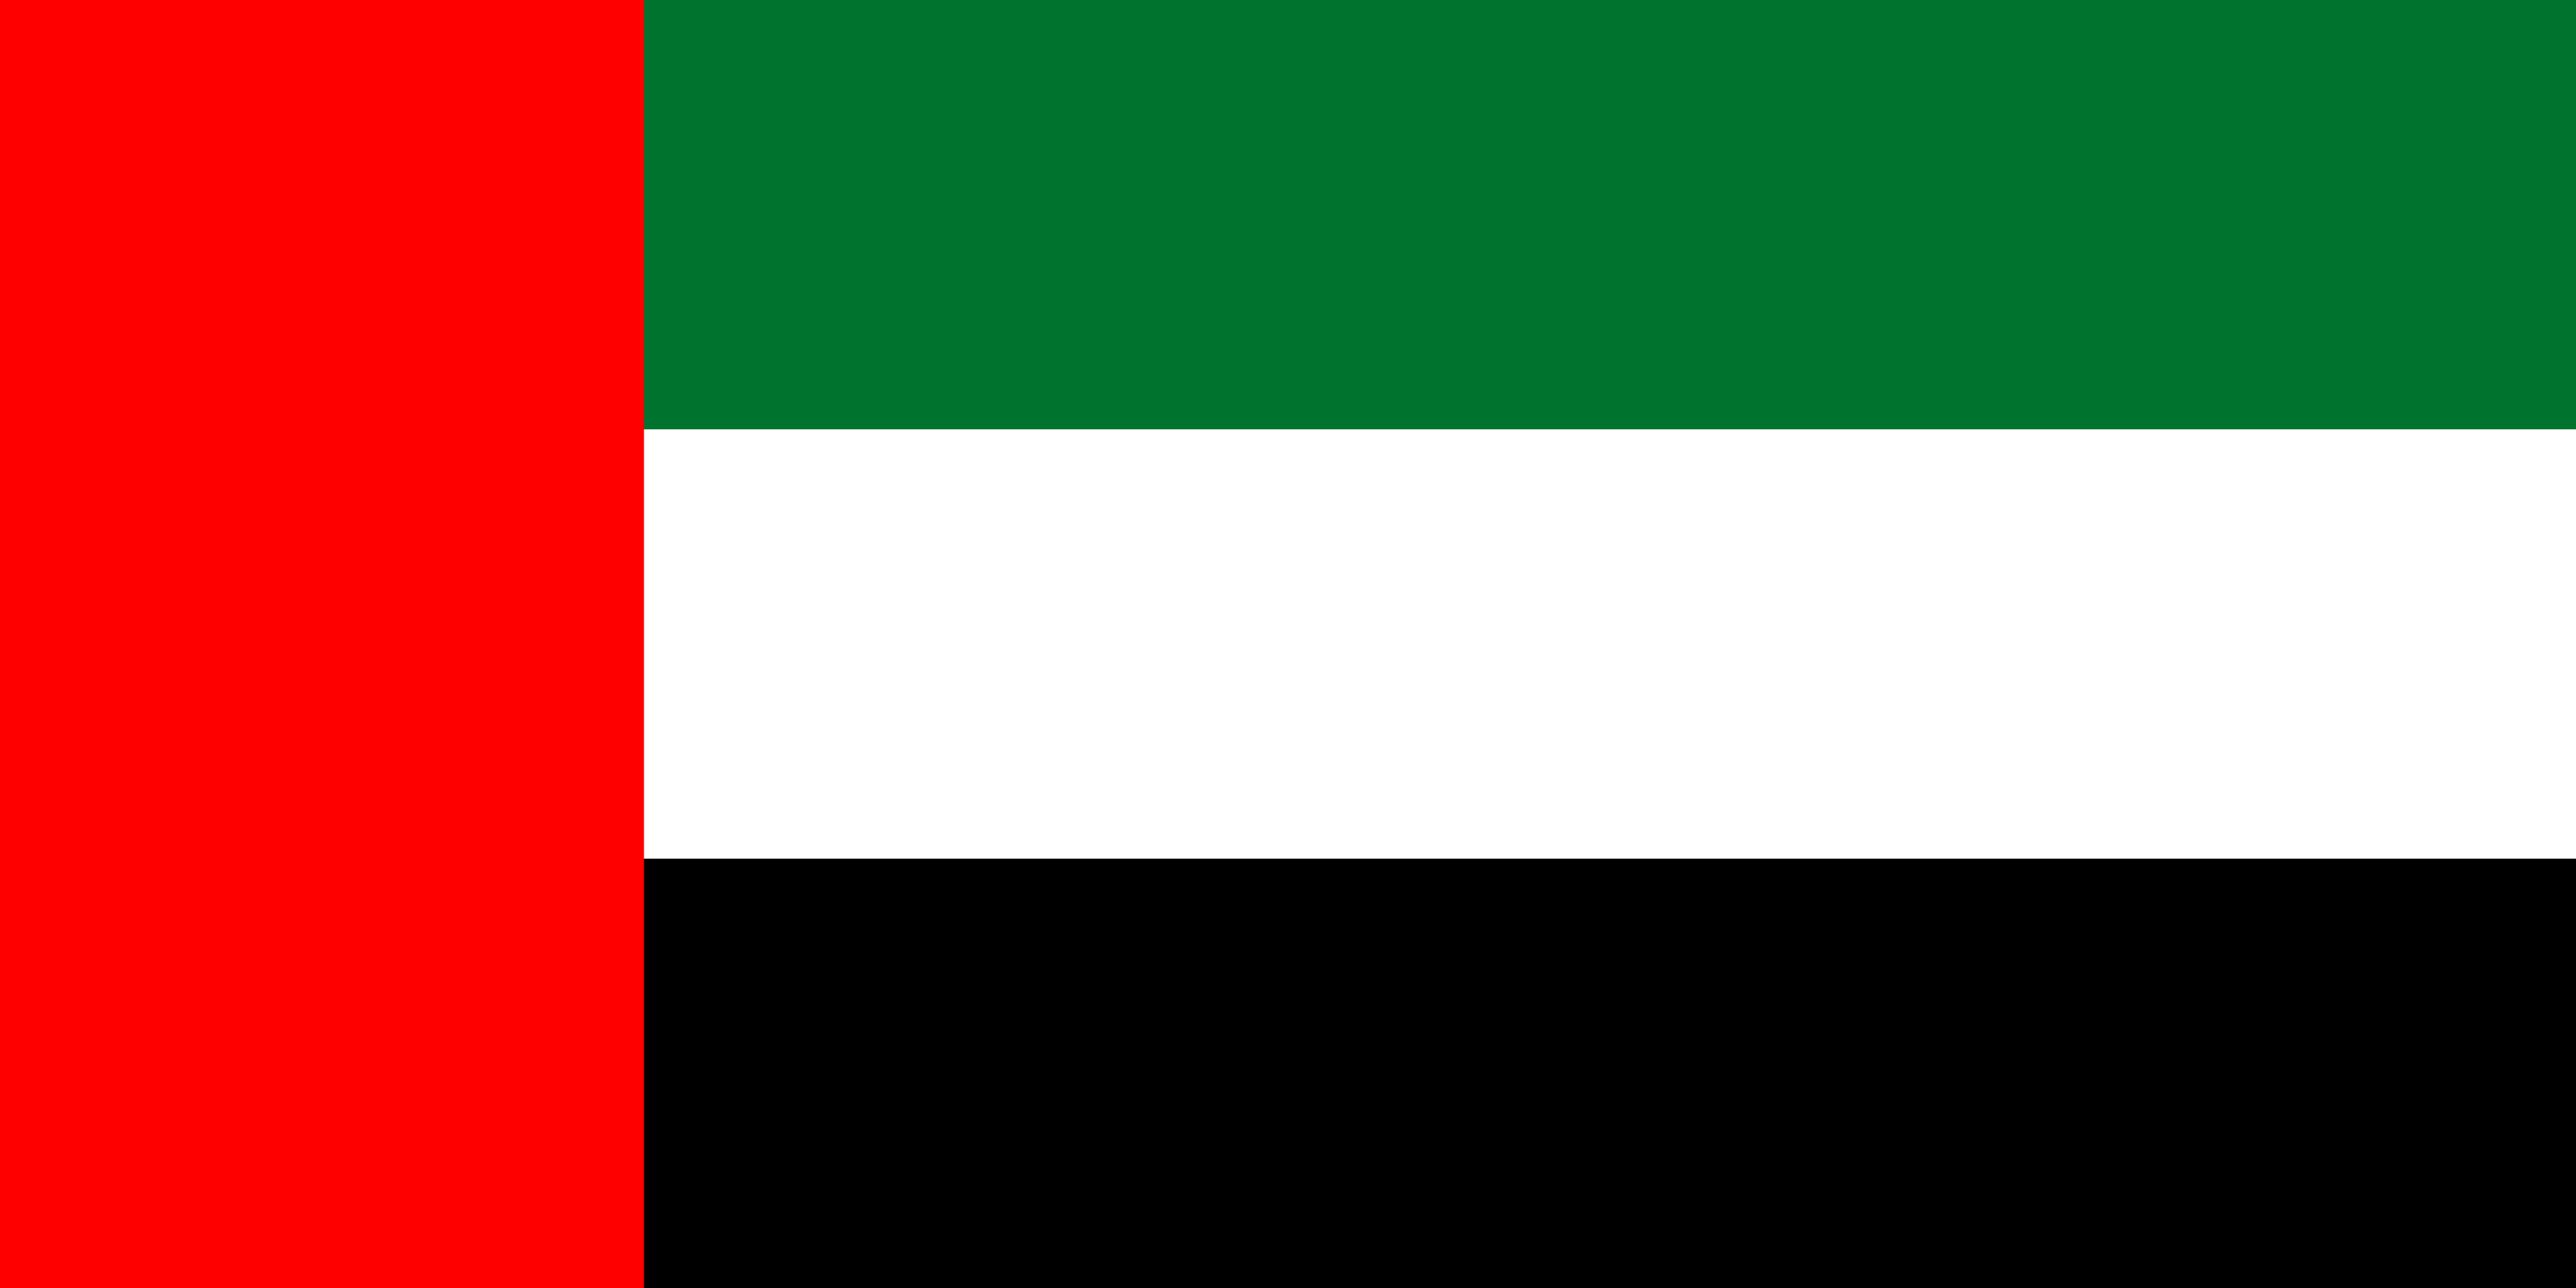 The United Arab Emirates Flag Image - Free Download